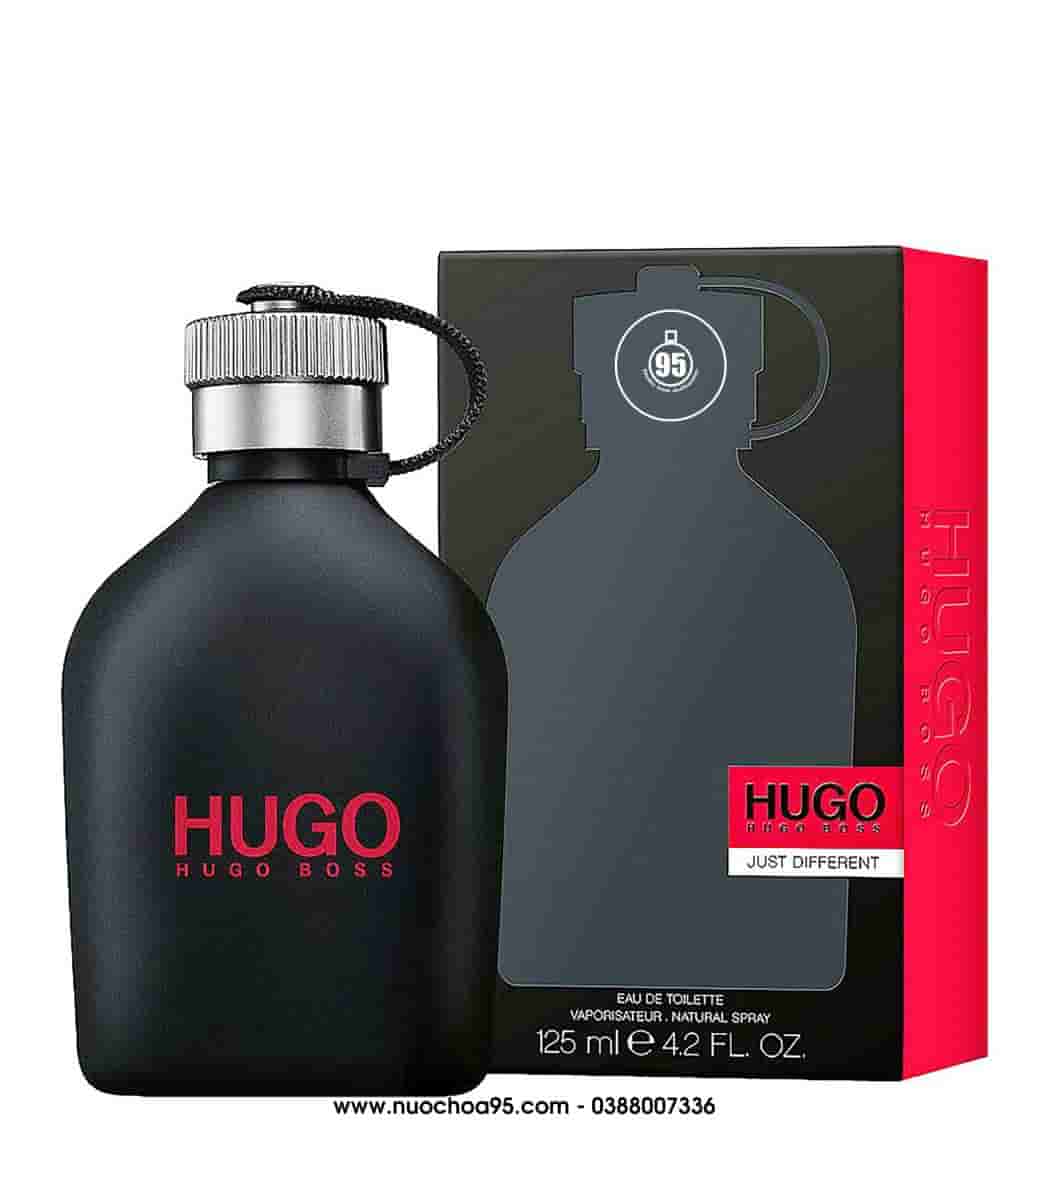 Nước hoa Hugo Boss Just Different 